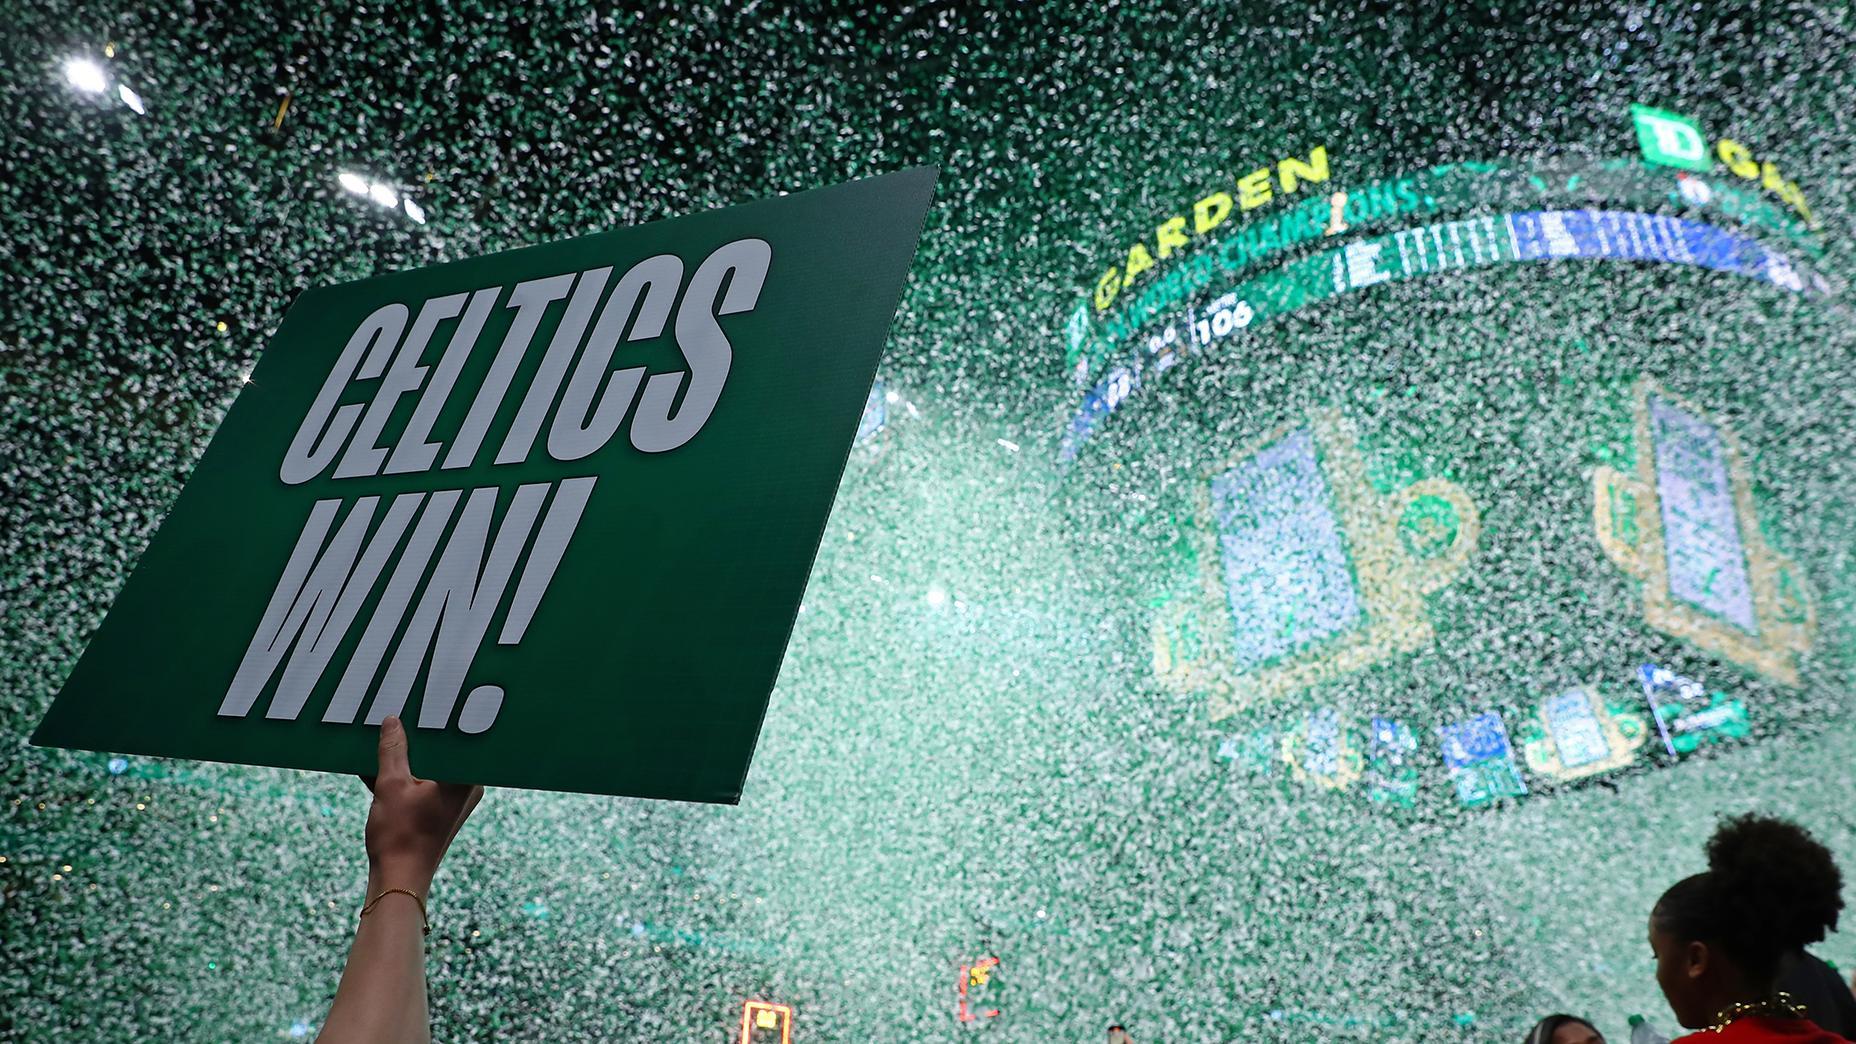 Celtics celebrate winning franchise's 18th NBA Finals